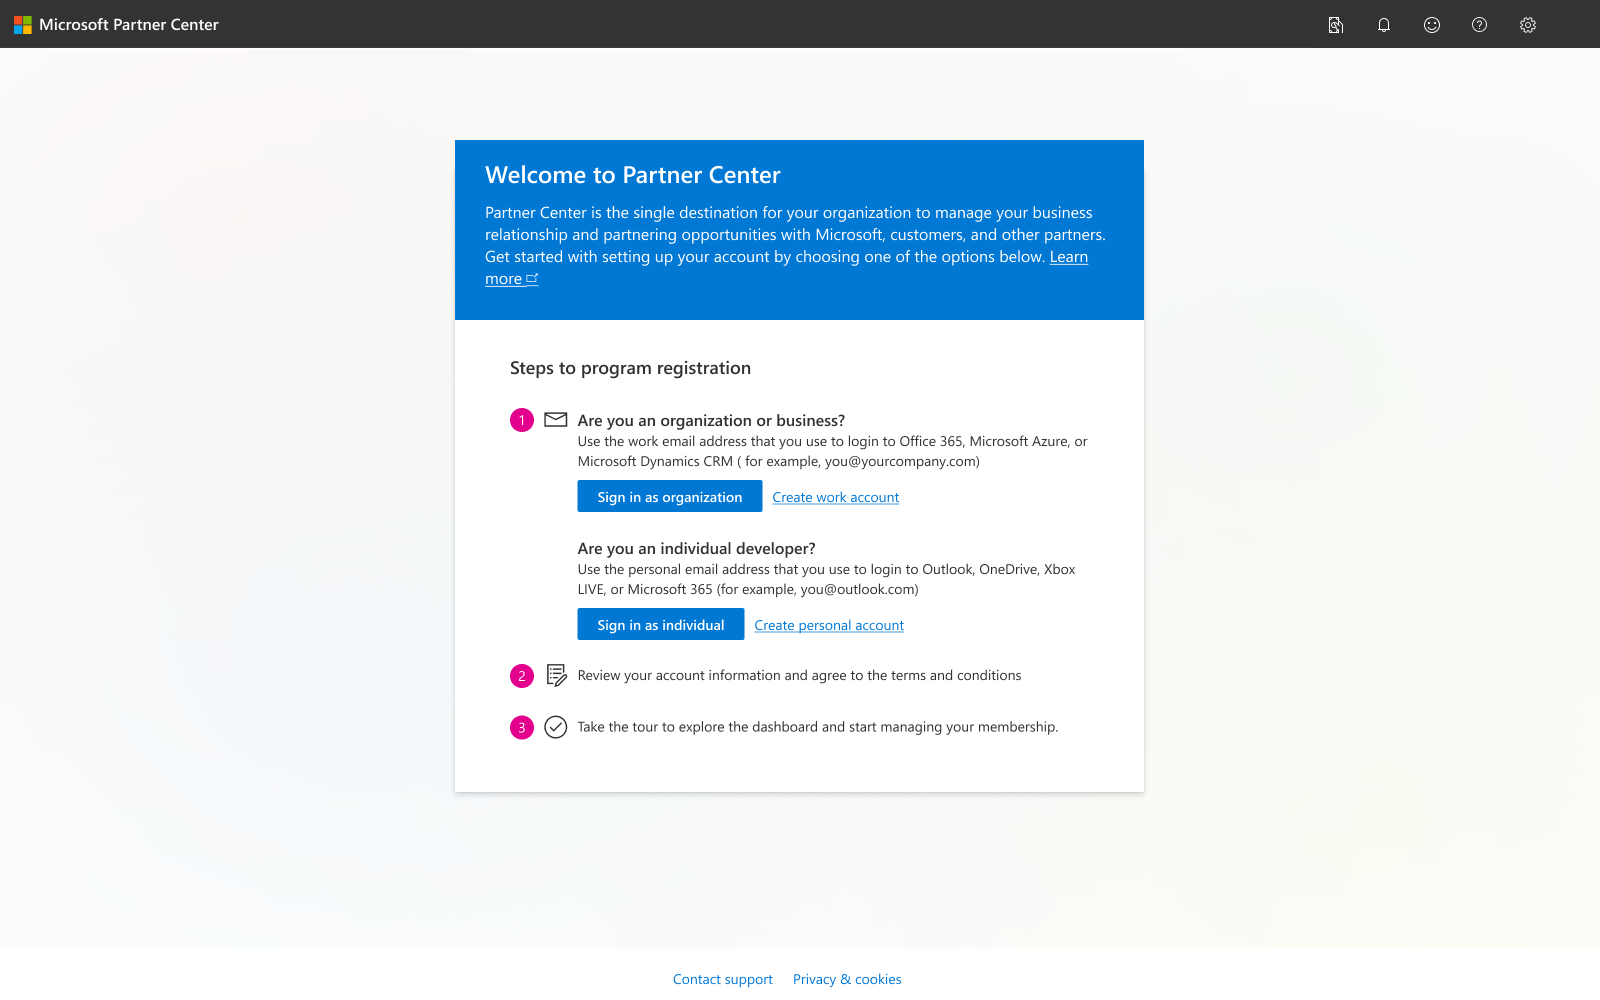 Page: 'Welcome to Partner Center: Steps to program registration'